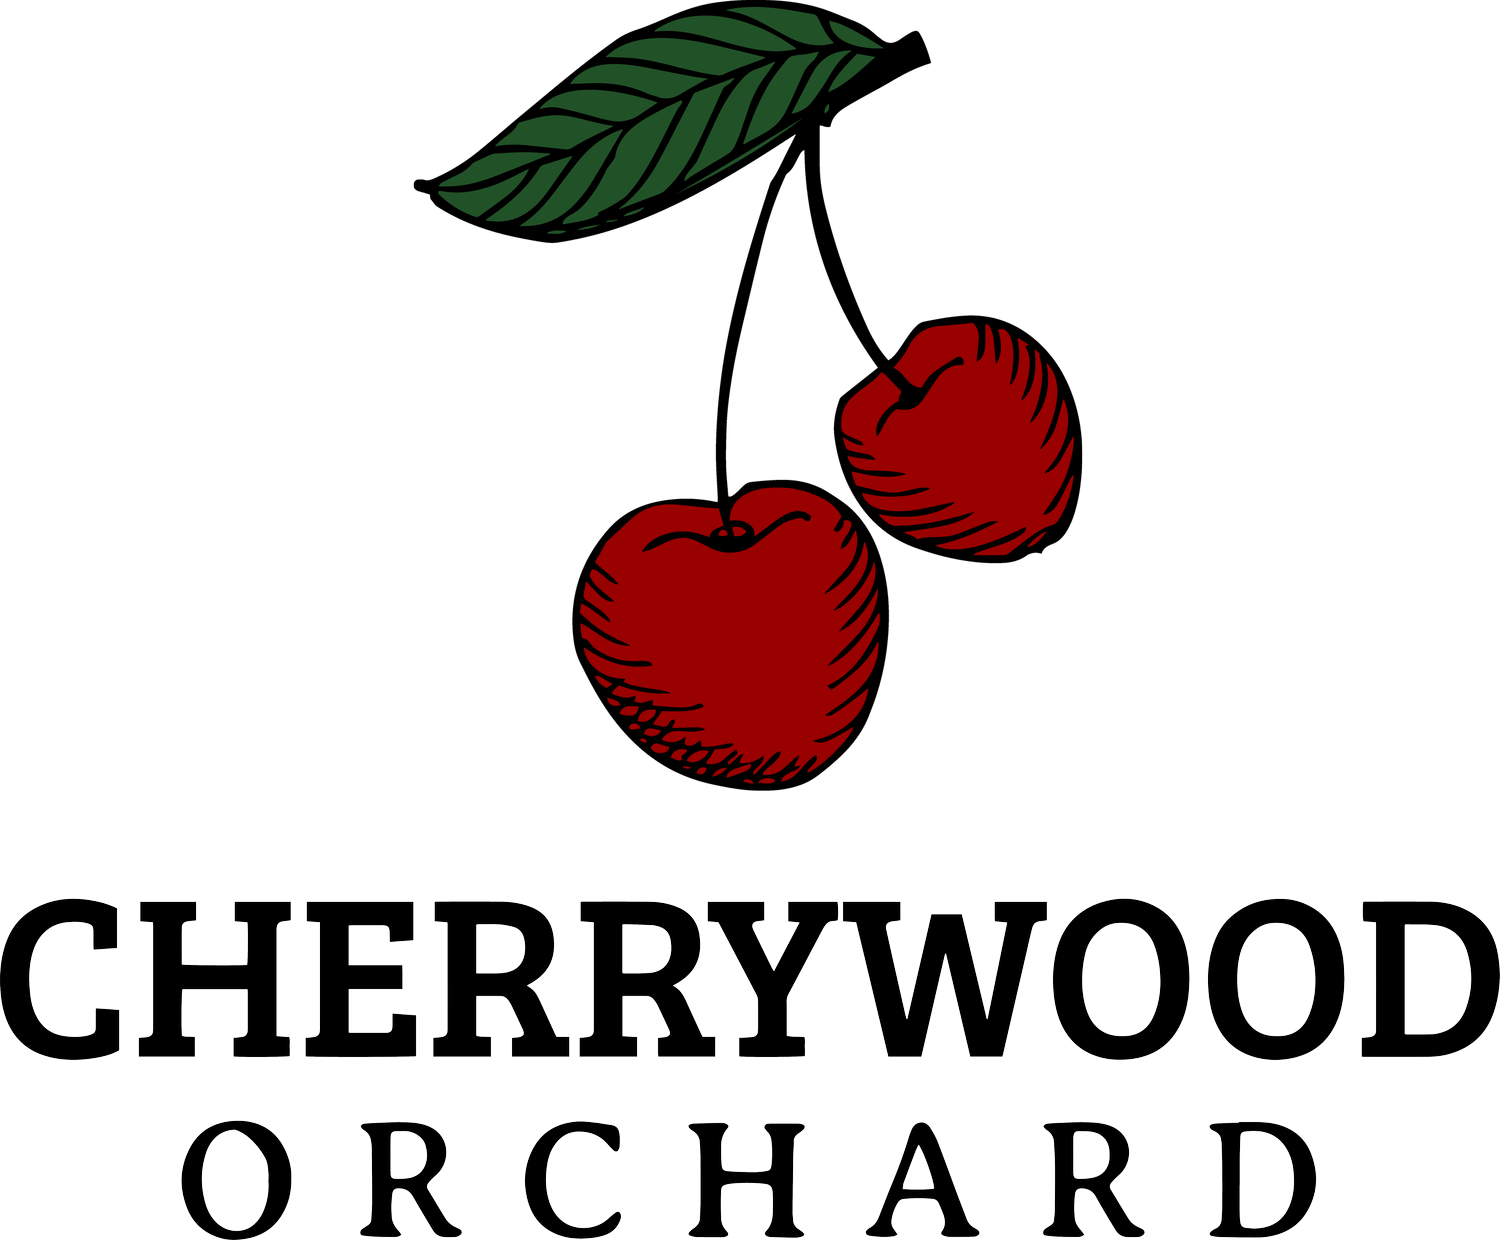 Cherrywood Orchard